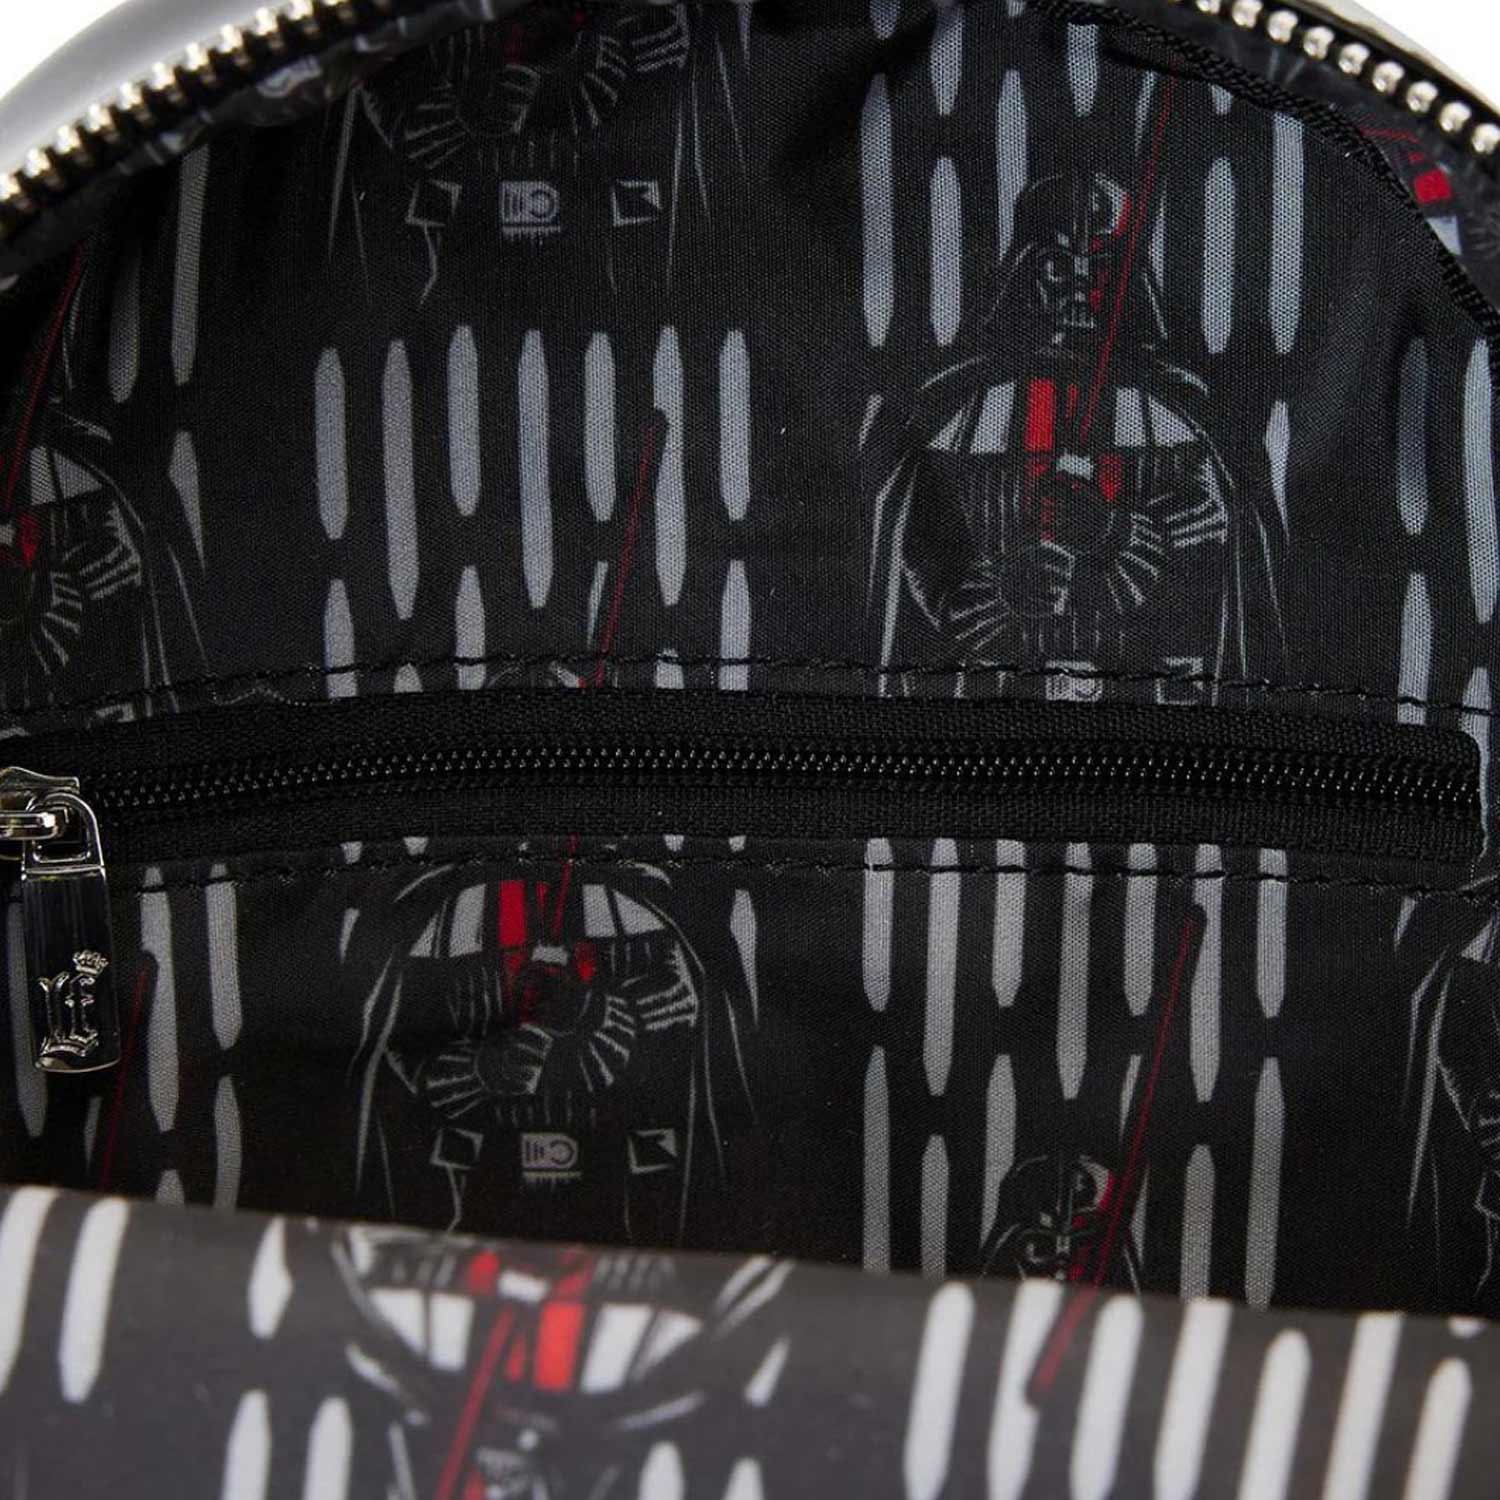 Loungefly x Star Wars Darth Vader Figural Helmet Crossbody Bag - GeekCore